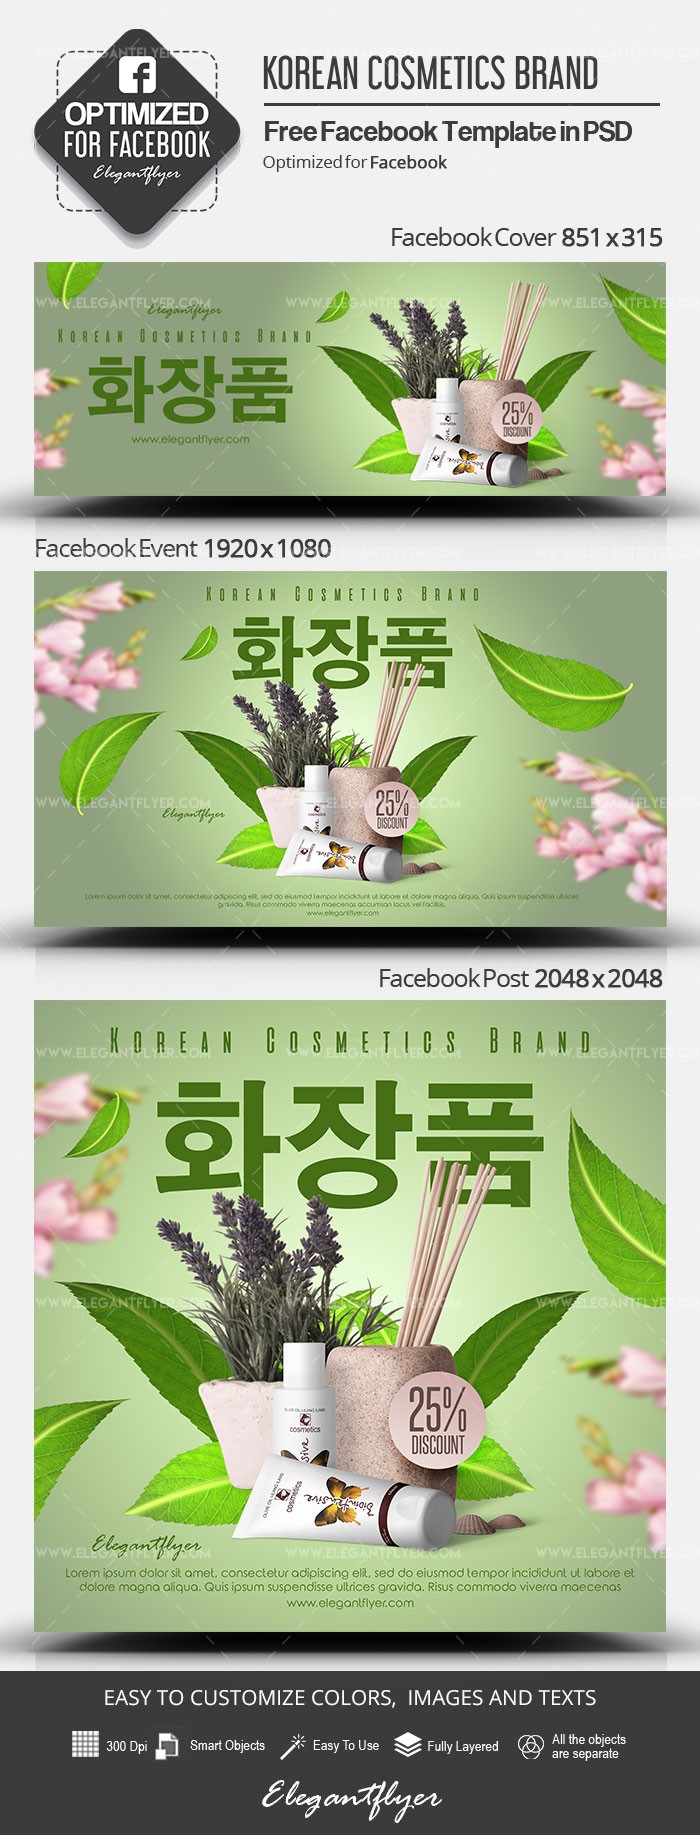 Koreańska marka kosmetyków na Facebooku by ElegantFlyer